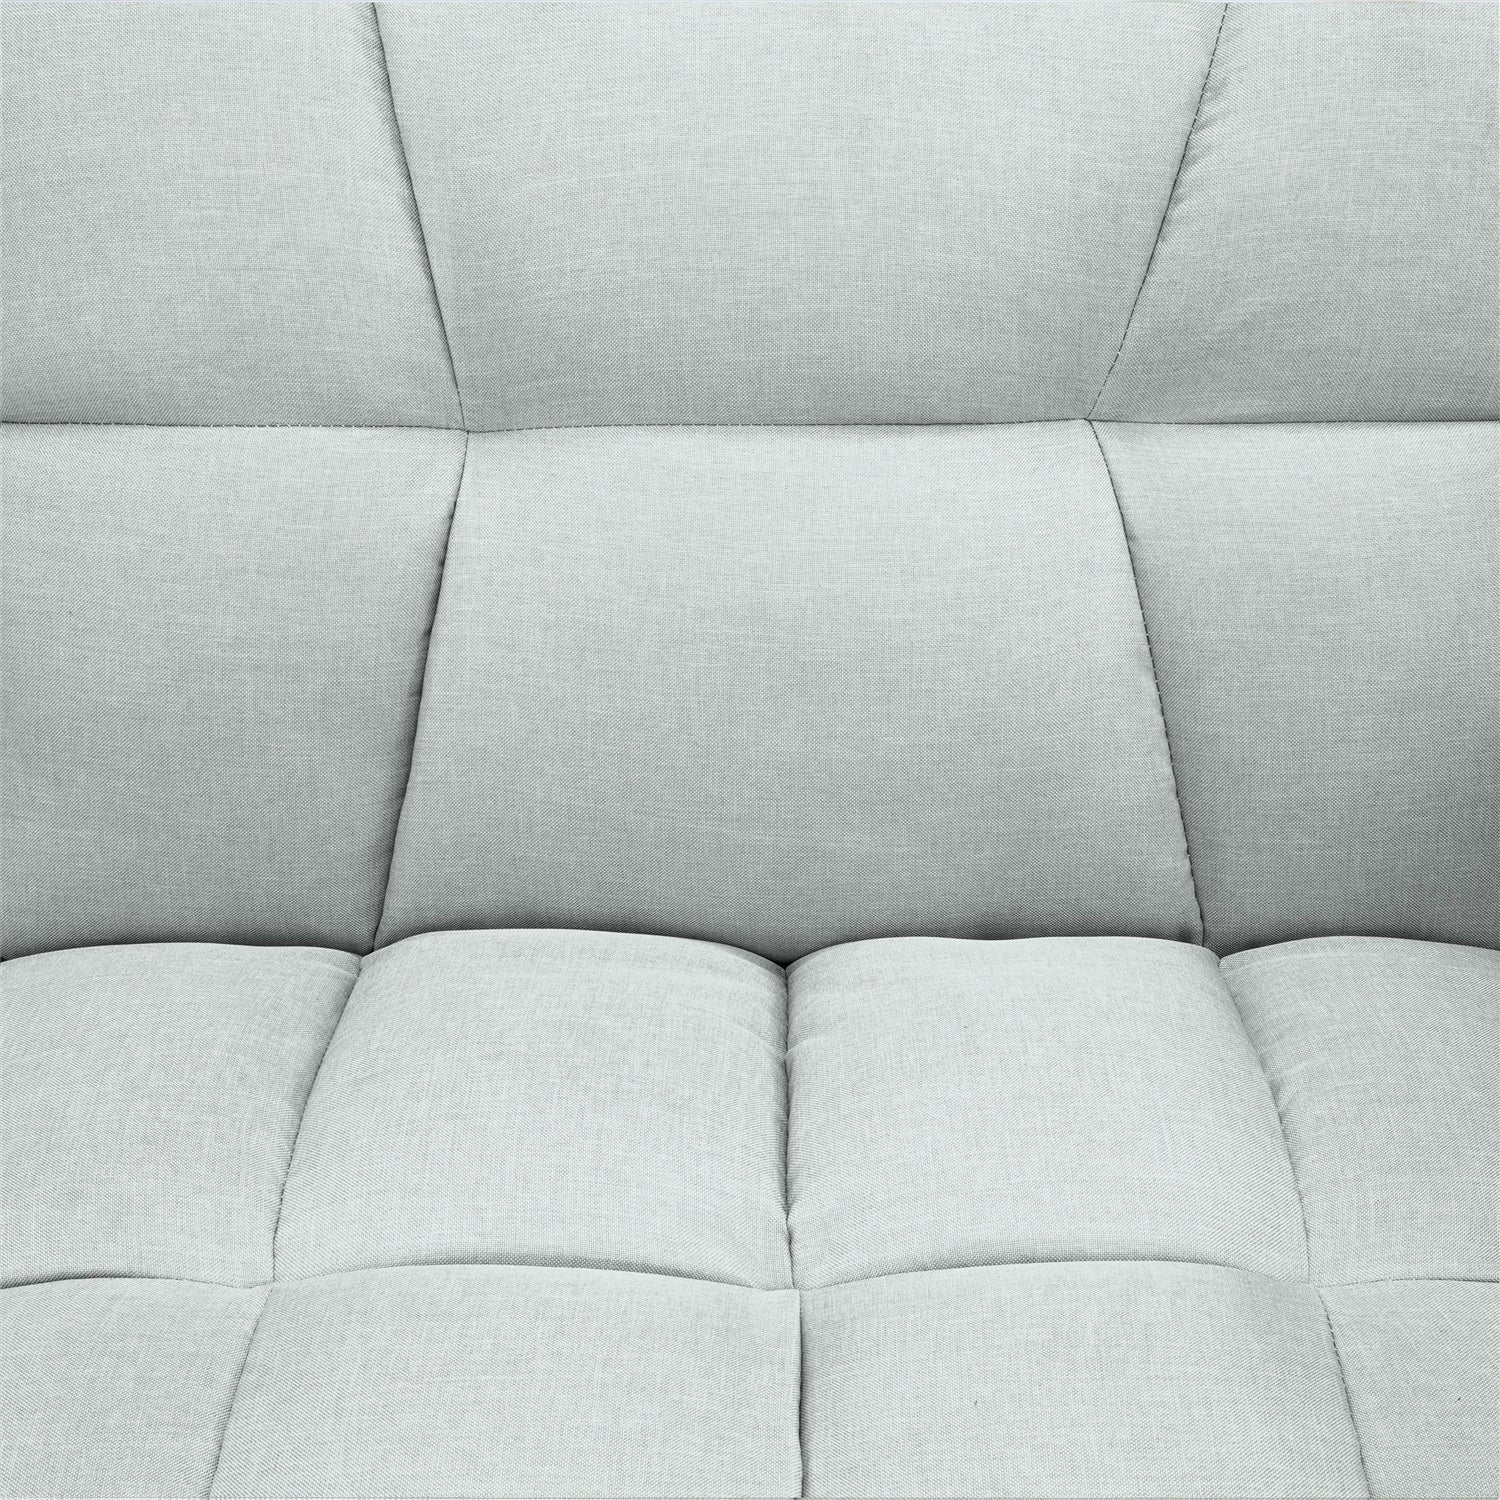 Living Room > Sofas - Plush Gray Split-Back Design Convertible Linen Tufted Futon W/ 2 Pillows